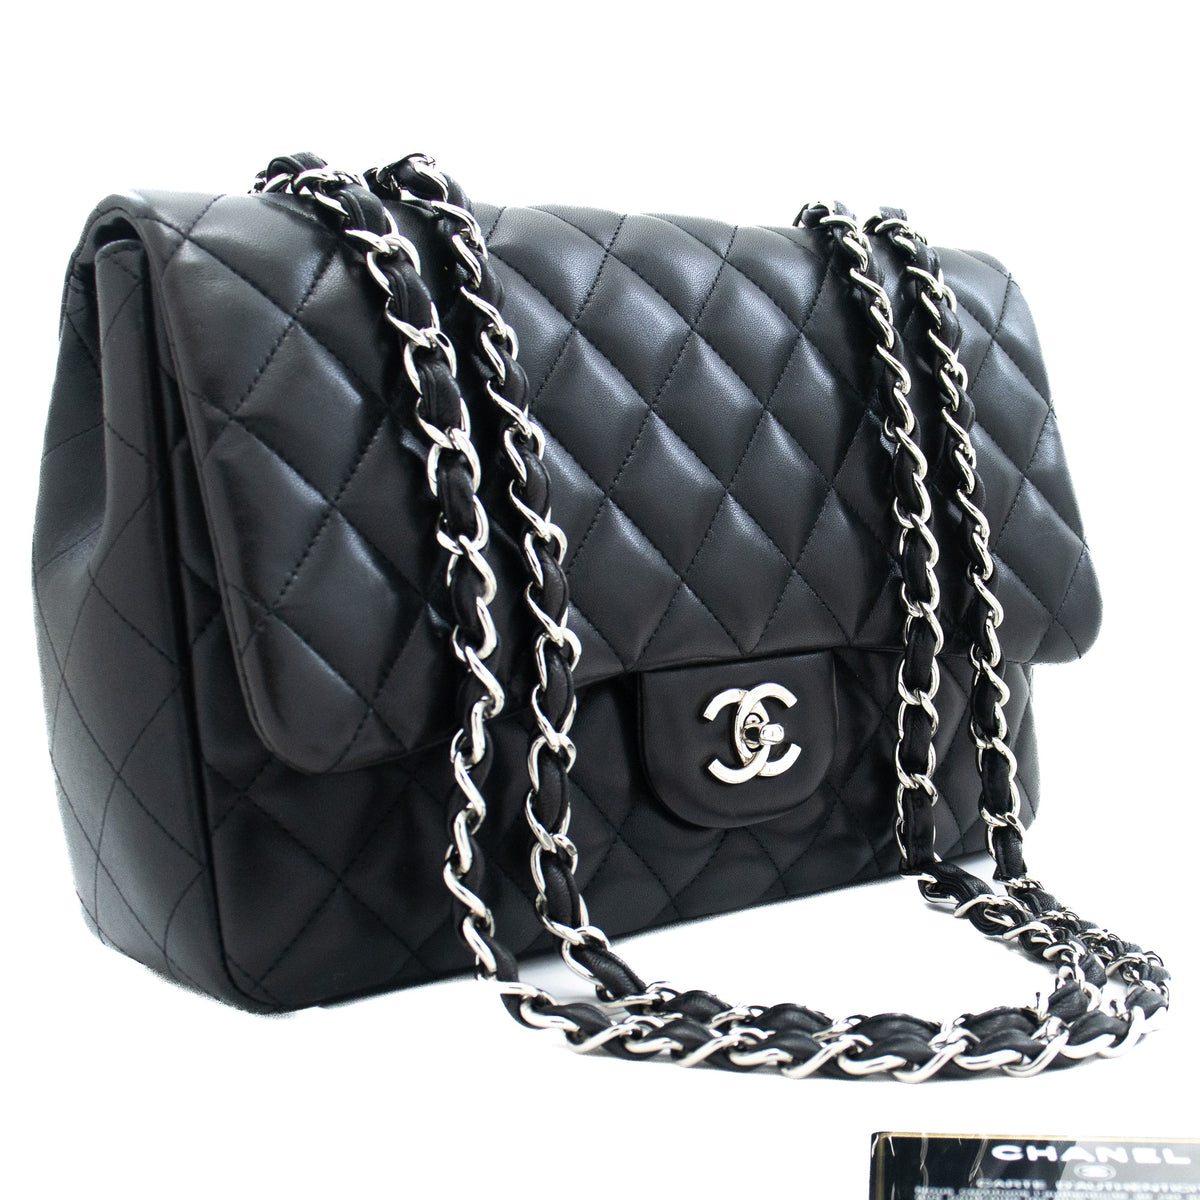 Chanel Vintage Chanel 12 Jumbo Black Quilted Leather Shoulder Flap